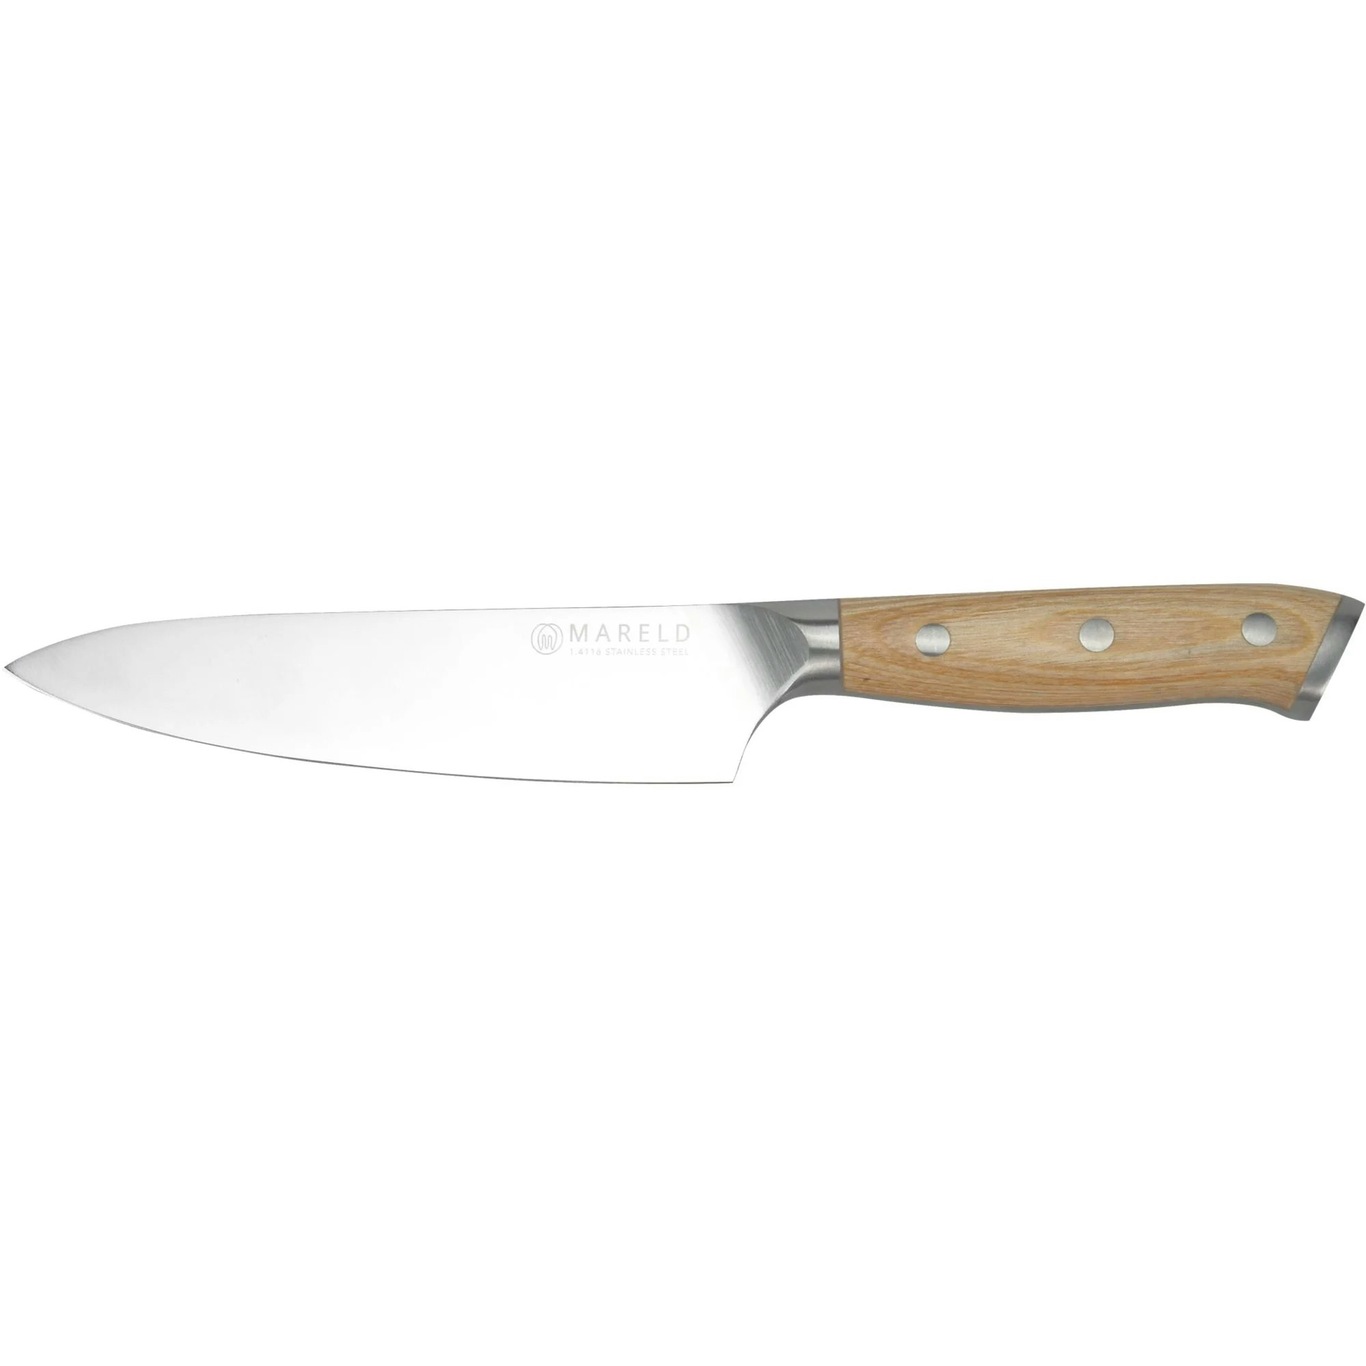 https://royaldesign.com/image/2/mareld-mareld-european-utility-knife-0?w=800&quality=80